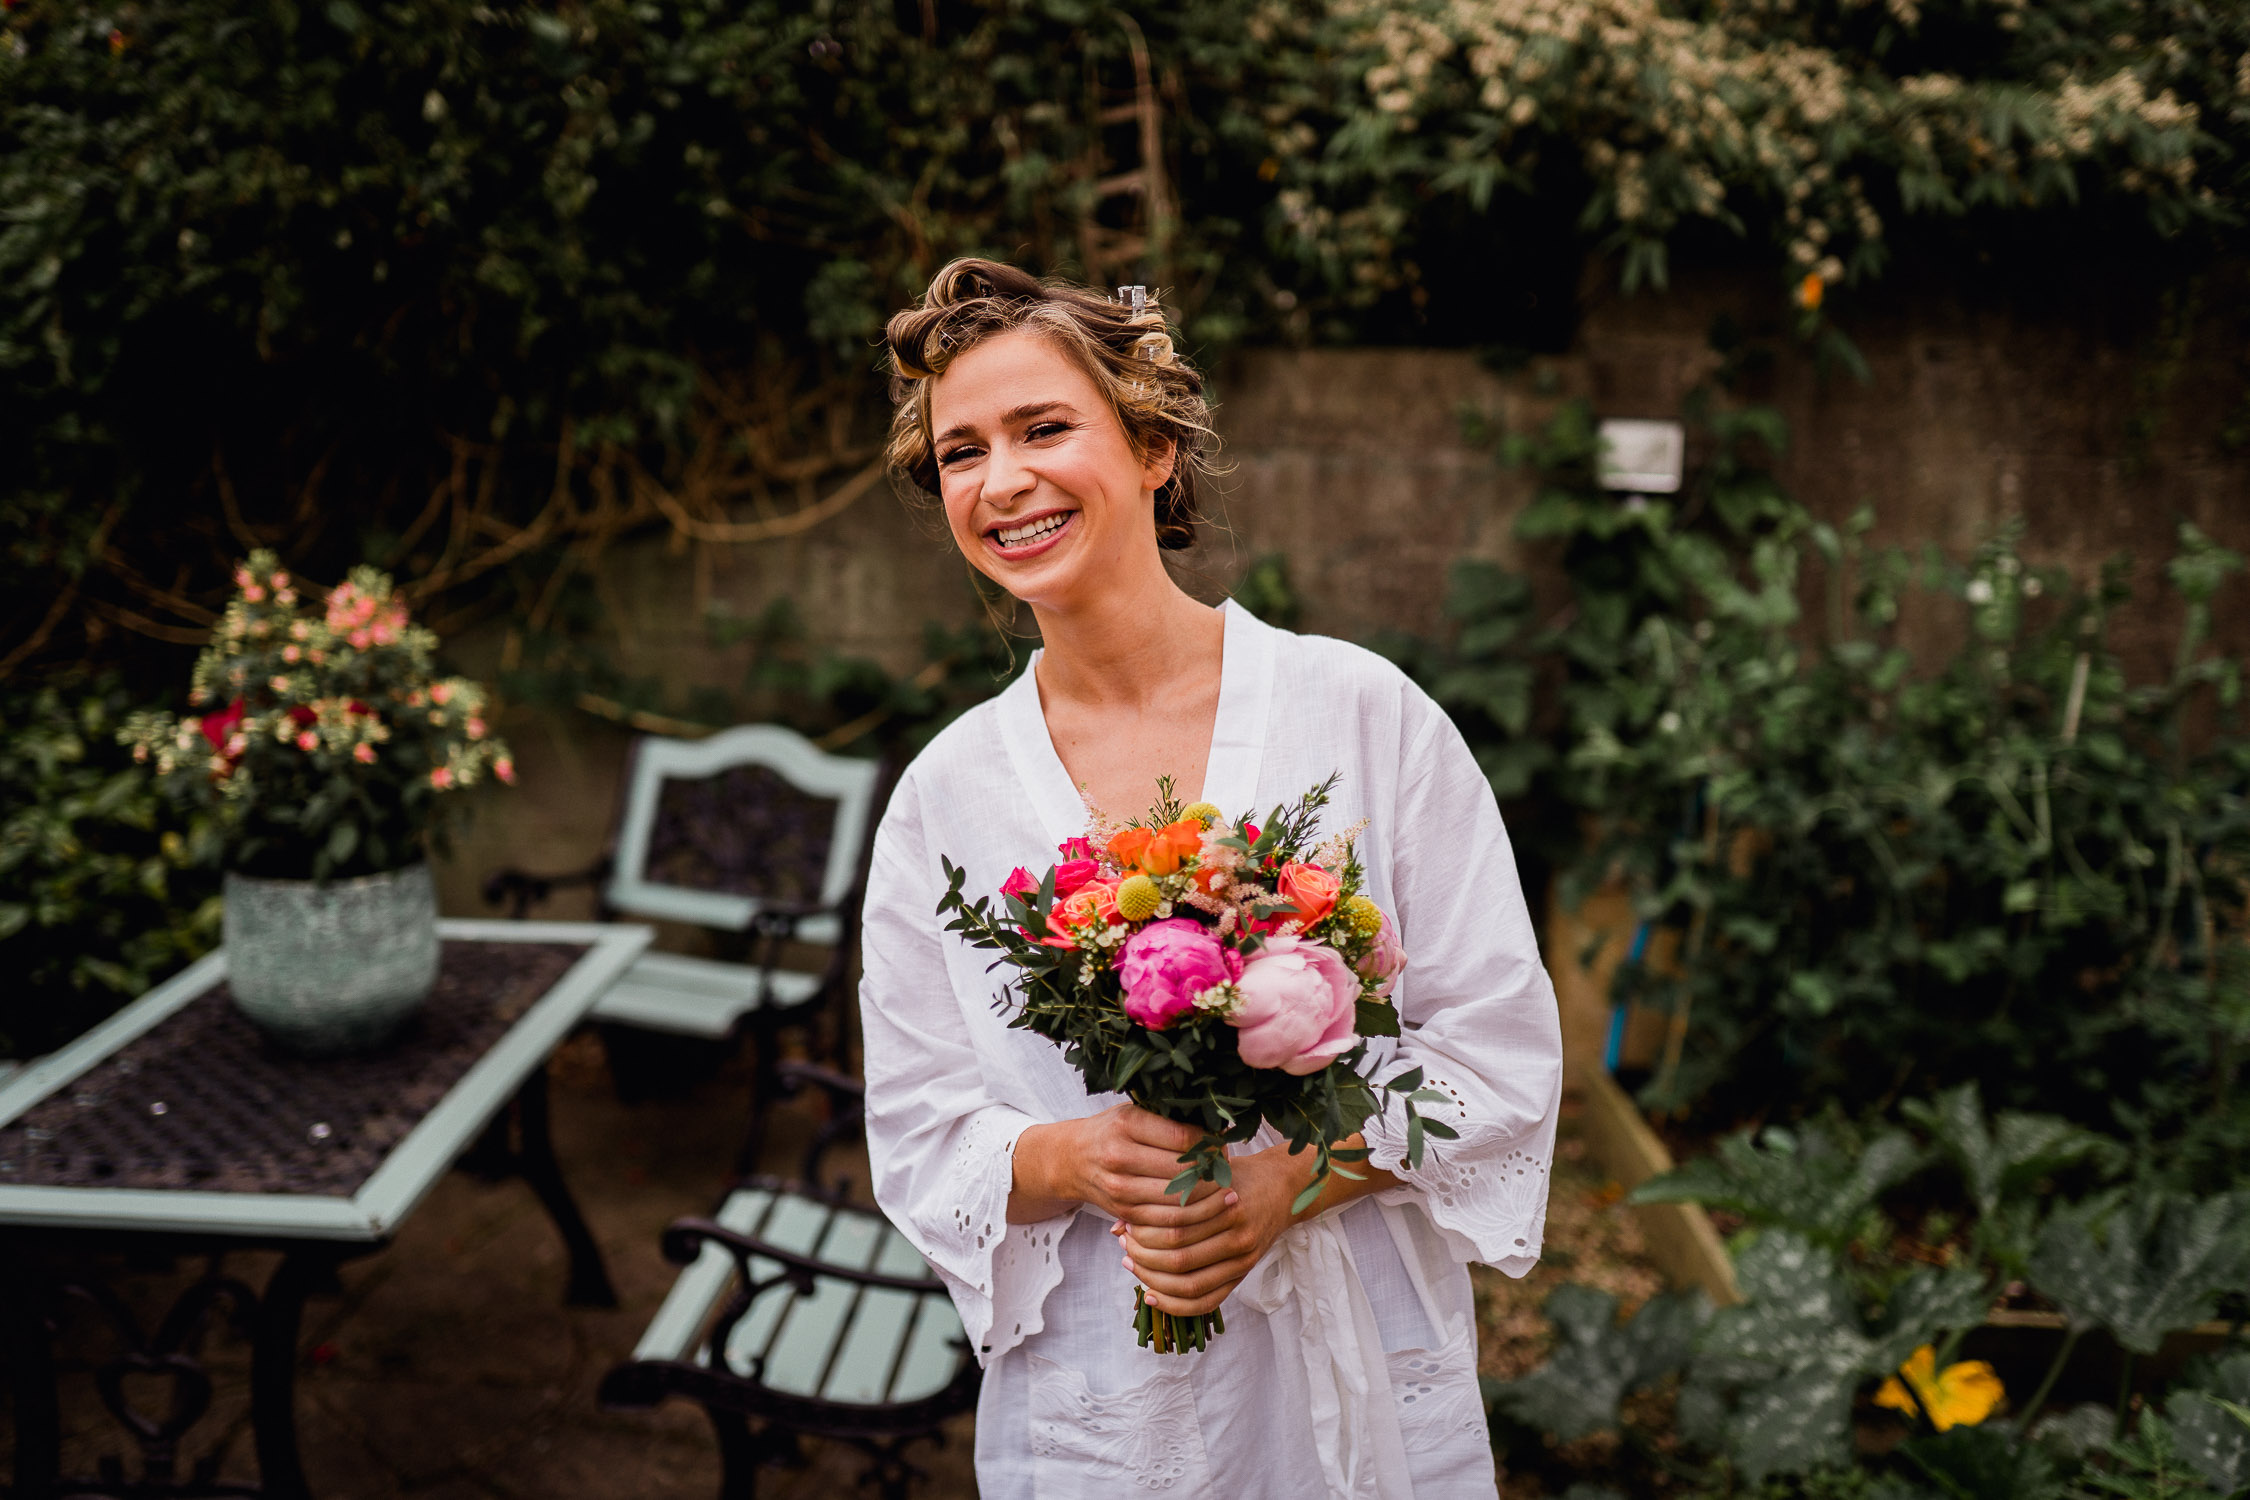 Bride standing in a garden holding flowers